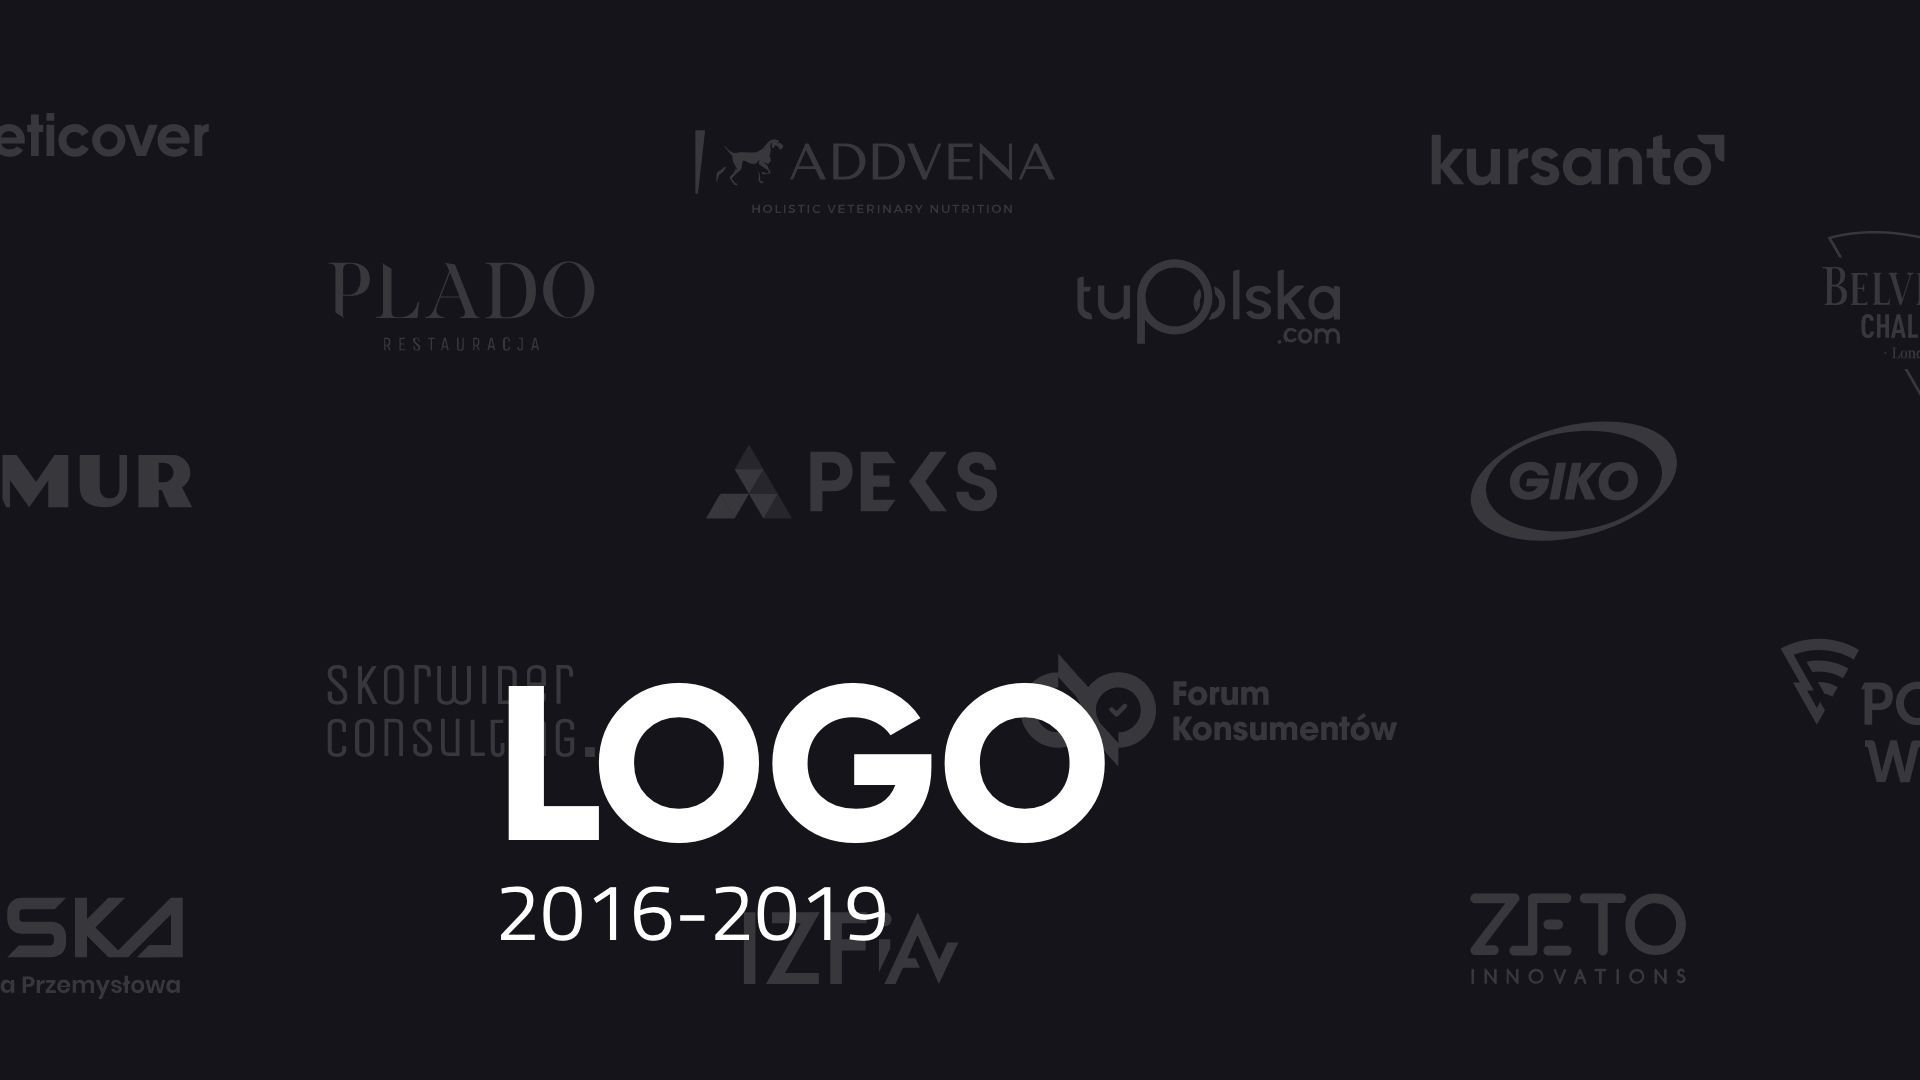 LOGO 2016-2019